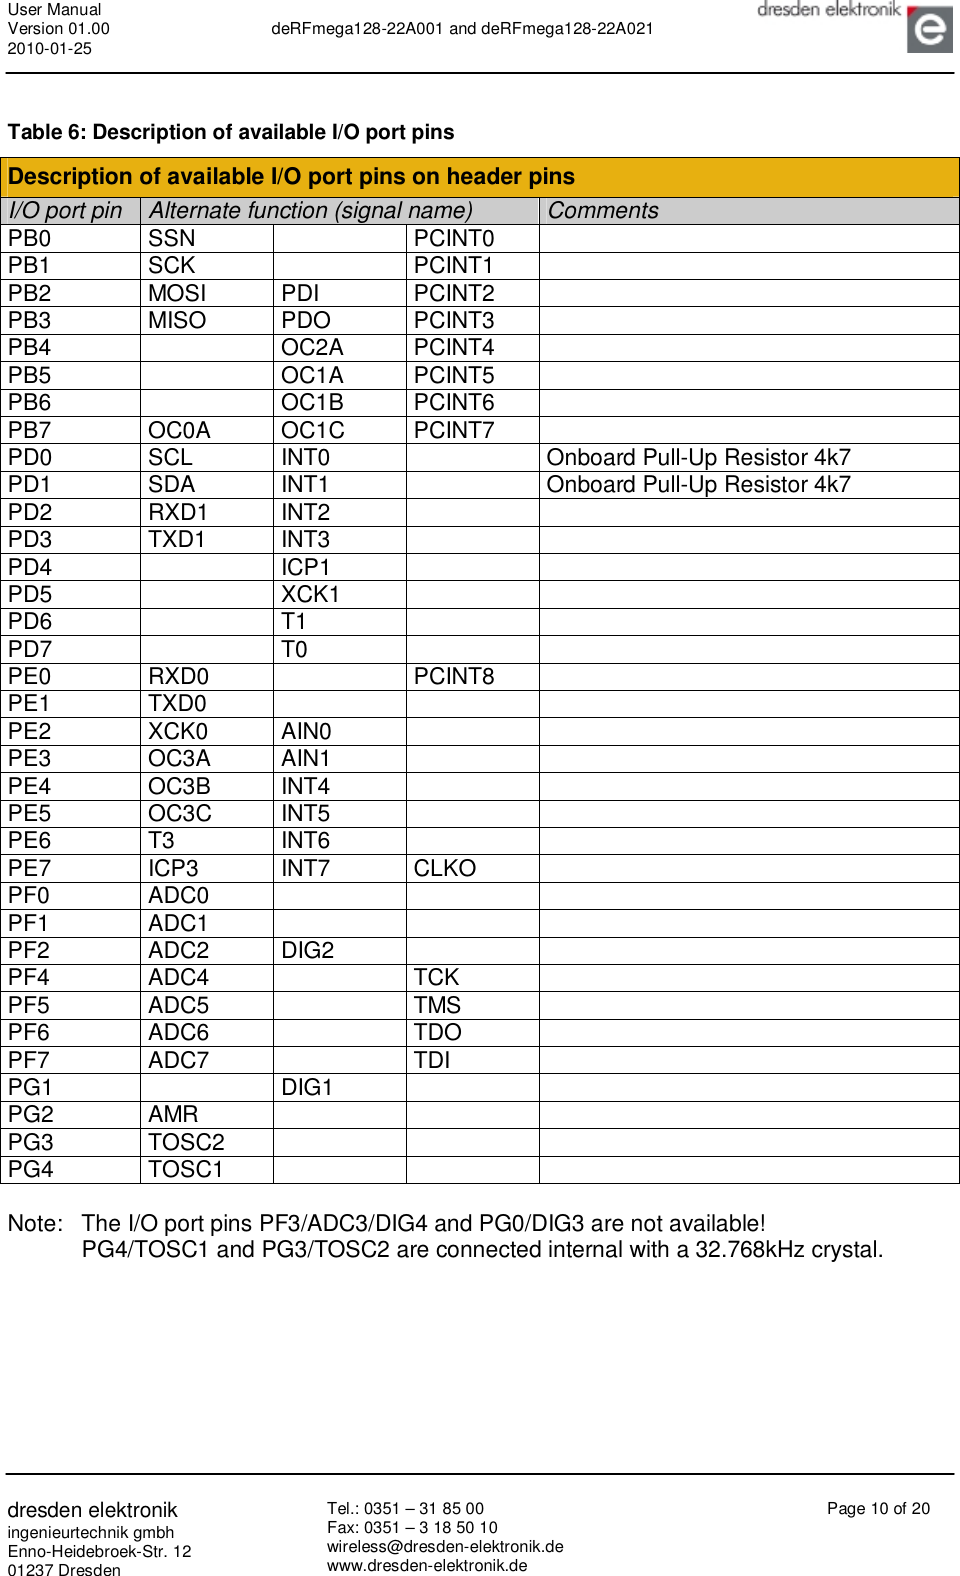 User Manual Version 01.00 2010-01-25  deRFmega128-22A001 and deRFmega128-22A021       dresden elektronik ingenieurtechnik gmbh Enno-Heidebroek-Str. 12 01237 Dresden Tel.: 0351 – 31 85 00 Fax: 0351 – 3 18 50 10 wireless@dresden-elektronik.de www.dresden-elektronik.de Page 10 of 20   Table 6: Description of available I/O port pins Description of available I/O port pins on header pins I/O port pin  Alternate function (signal name)  Comments PB0  SSN    PCINT0   PB1  SCK    PCINT1   PB2  MOSI  PDI  PCINT2   PB3  MISO  PDO  PCINT3   PB4    OC2A  PCINT4   PB5    OC1A  PCINT5   PB6     OC1B  PCINT6   PB7  OC0A  OC1C  PCINT7   PD0  SCL  INT0    Onboard Pull-Up Resistor 4k7 PD1  SDA  INT1    Onboard Pull-Up Resistor 4k7 PD2  RXD1  INT2     PD3  TXD1  INT3     PD4    ICP1     PD5    XCK1     PD6    T1     PD7    T0     PE0  RXD0    PCINT8   PE1  TXD0       PE2  XCK0  AIN0     PE3  OC3A  AIN1     PE4  OC3B  INT4     PE5  OC3C  INT5     PE6  T3  INT6     PE7  ICP3  INT7  CLKO   PF0  ADC0       PF1  ADC1       PF2  ADC2  DIG2     PF4  ADC4    TCK   PF5  ADC5    TMS   PF6  ADC6    TDO   PF7  ADC7    TDI   PG1    DIG1     PG2  AMR       PG3  TOSC2       PG4  TOSC1        Note:  The I/O port pins PF3/ADC3/DIG4 and PG0/DIG3 are not available!  PG4/TOSC1 and PG3/TOSC2 are connected internal with a 32.768kHz crystal. 